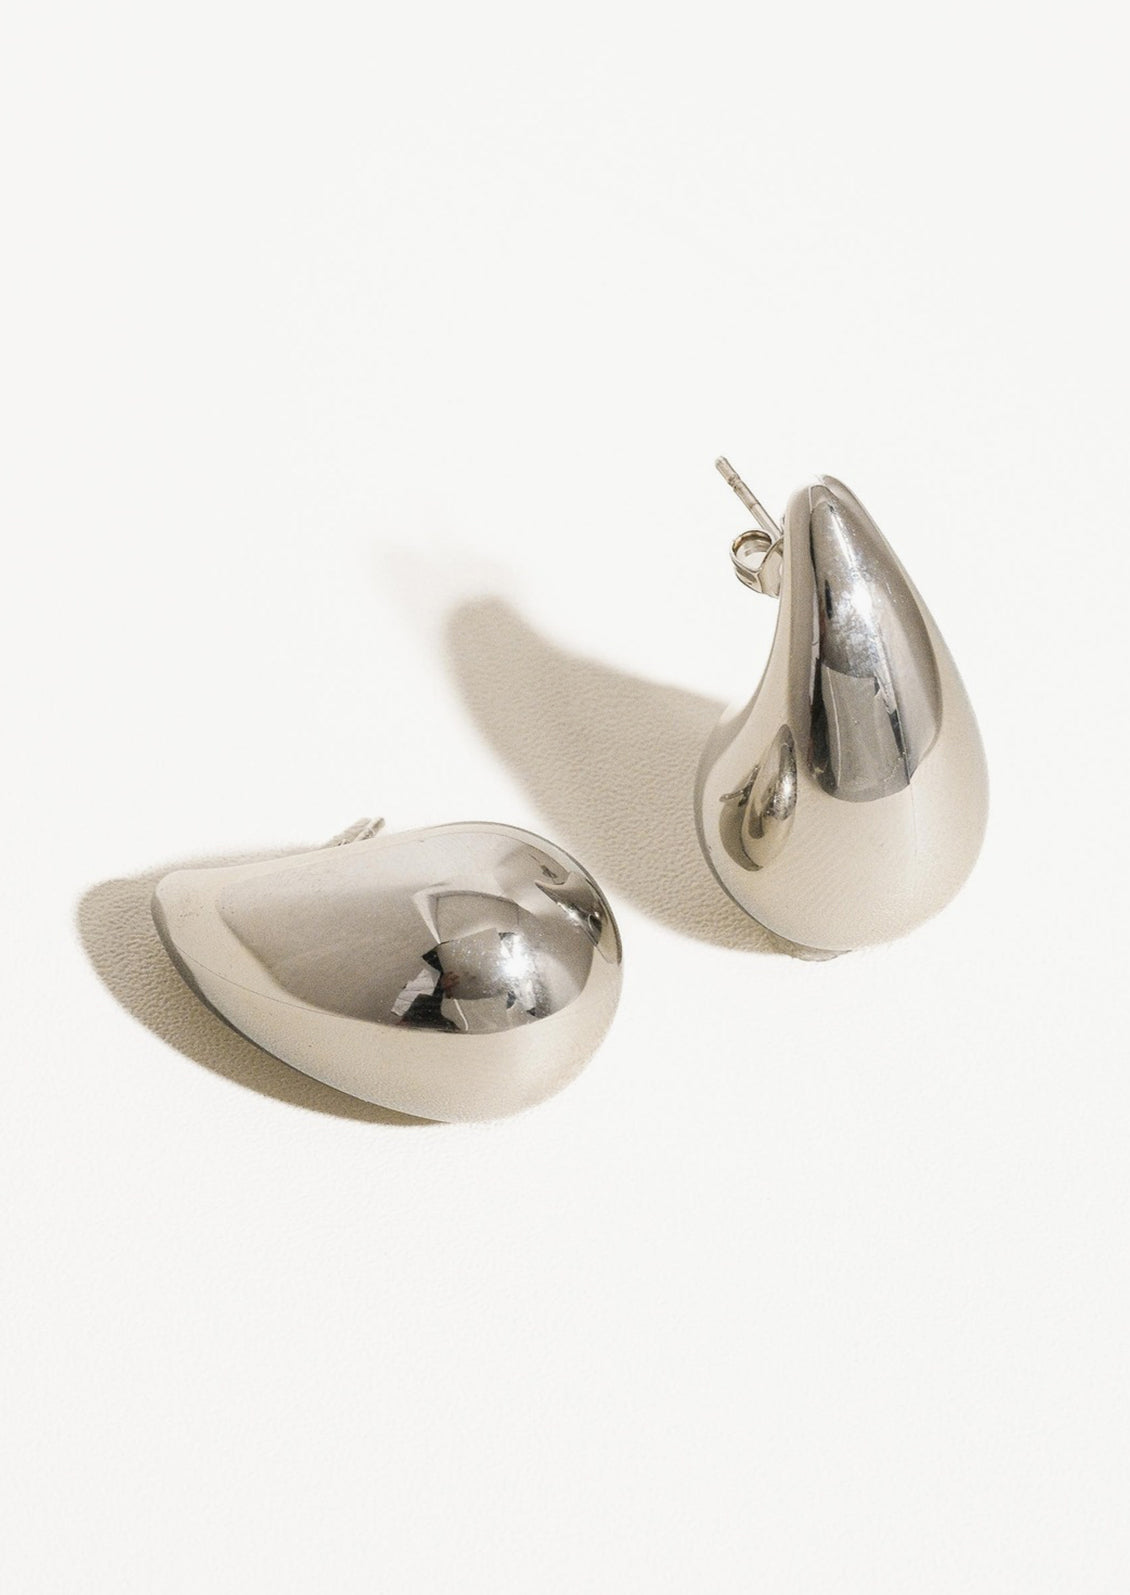 A pair of chunky, teardrop-shaped earrings in silver.